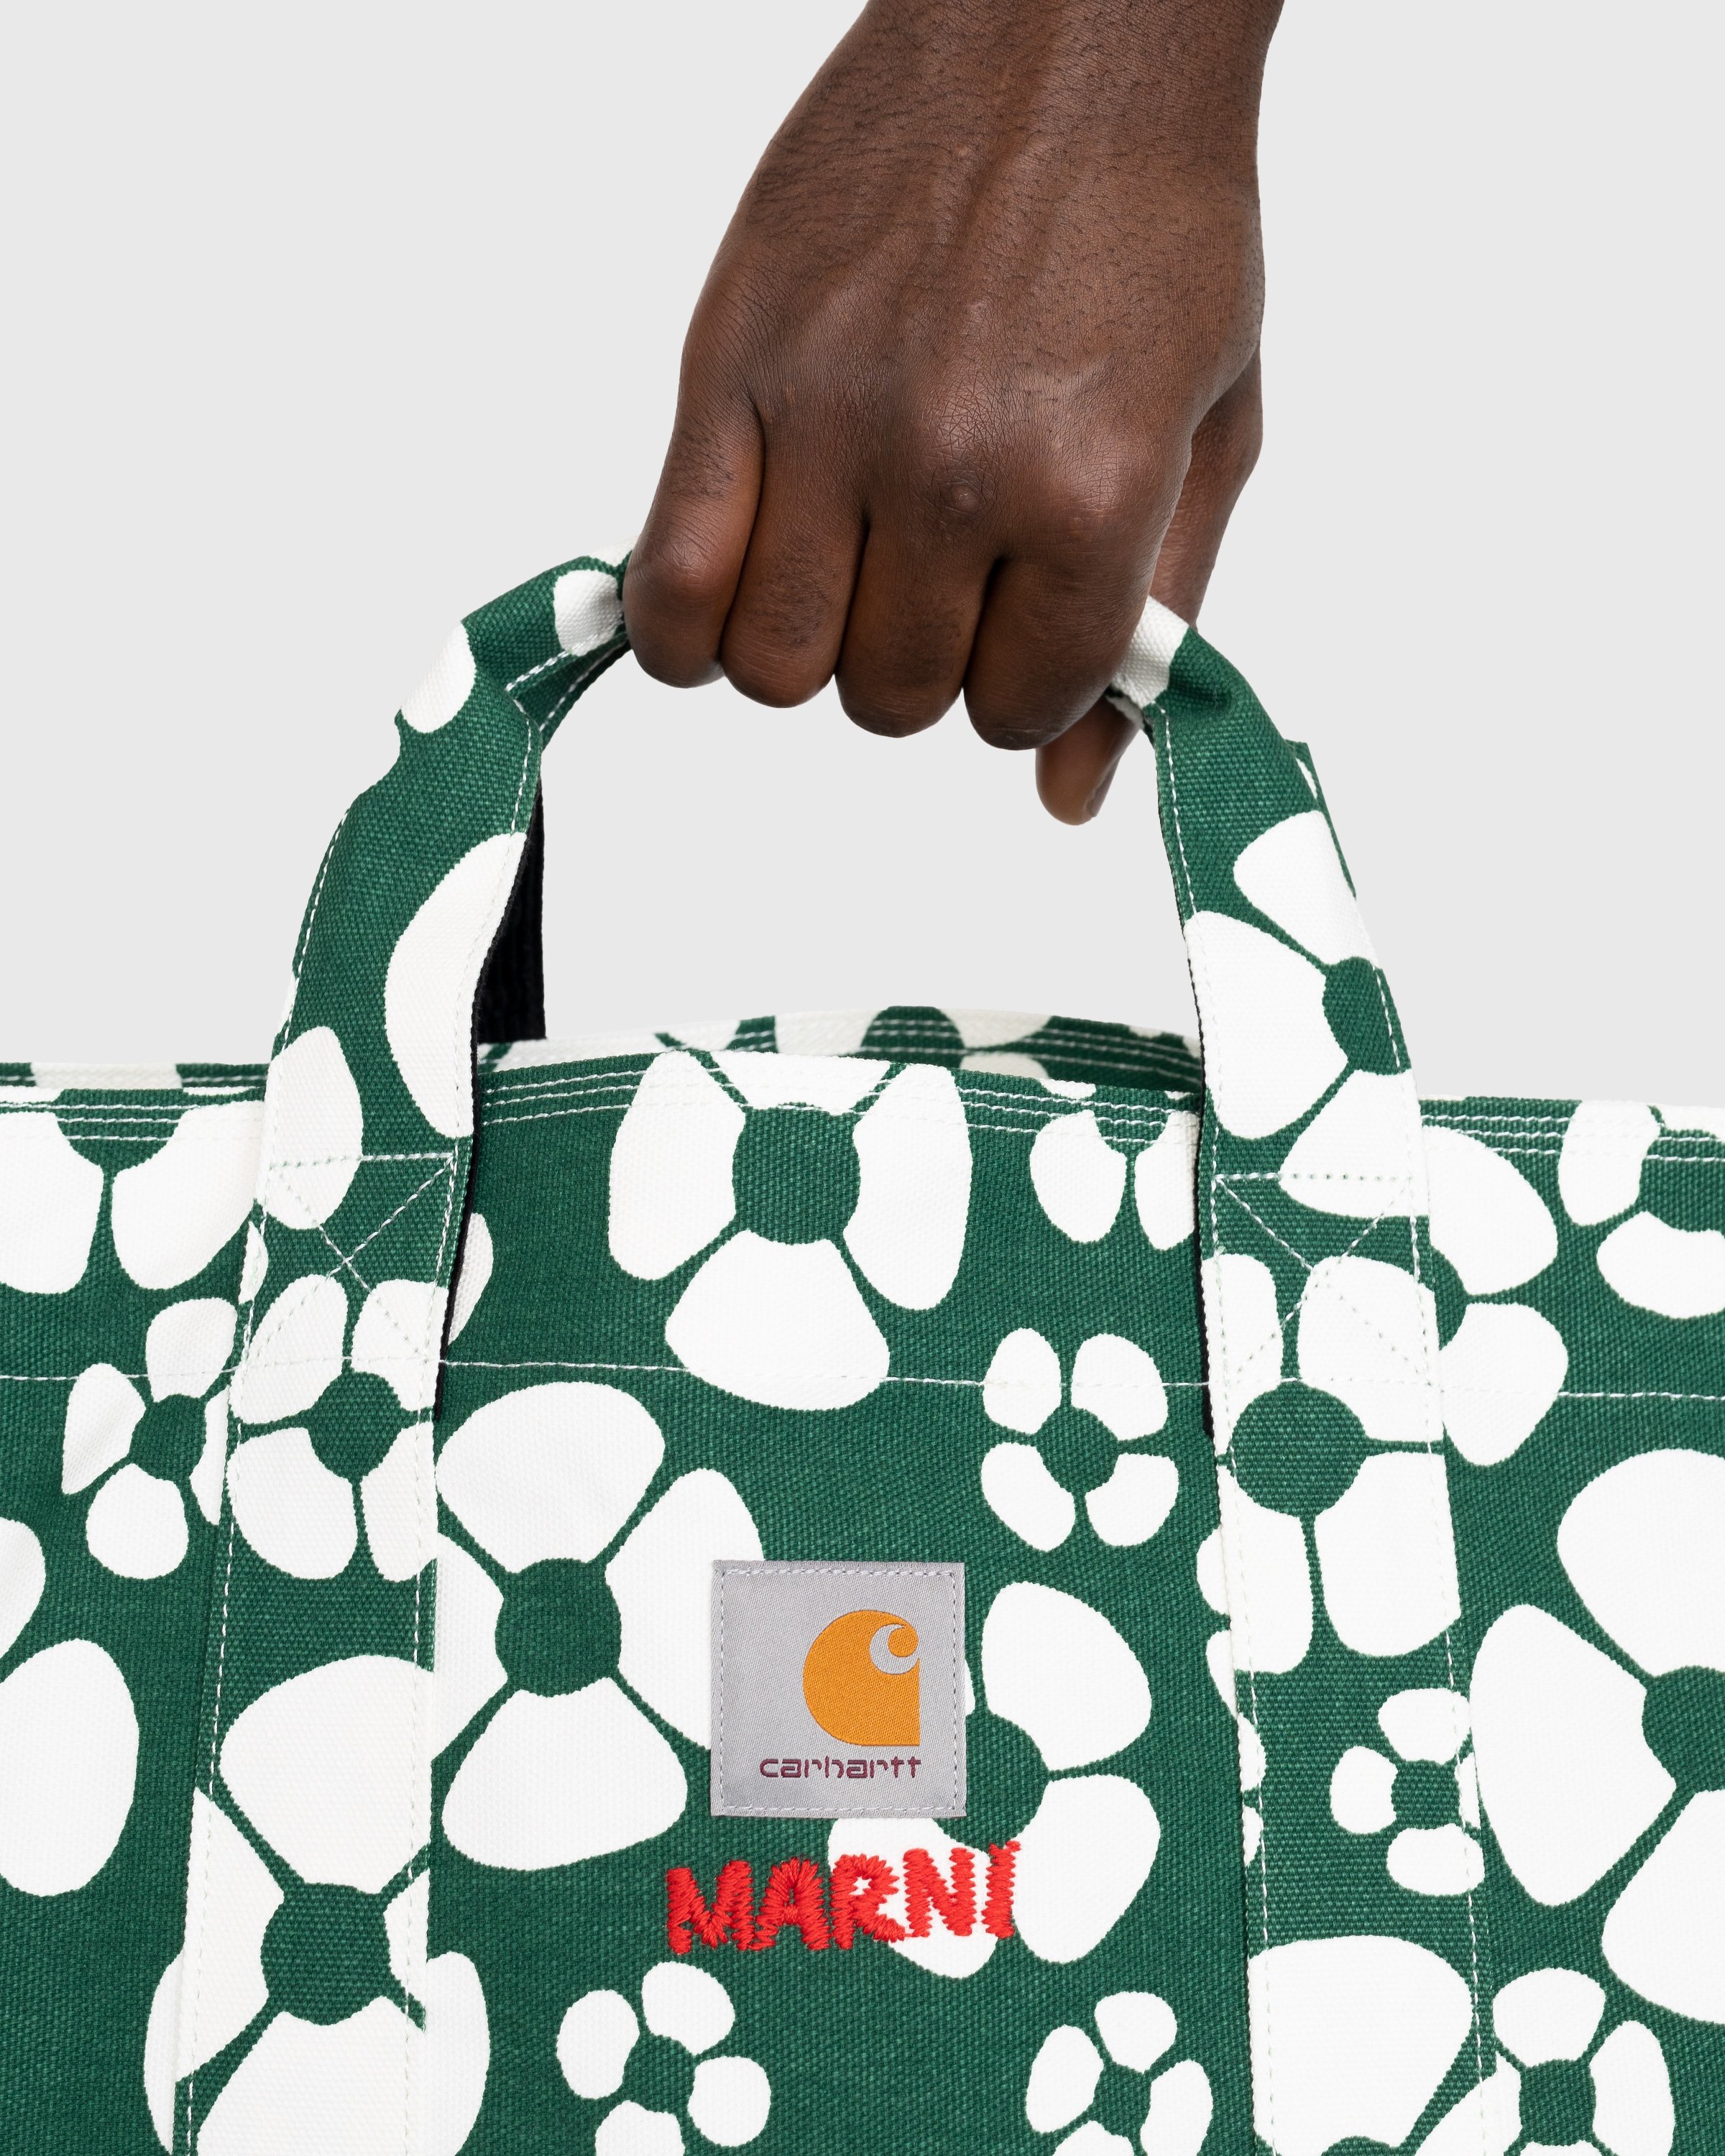 Marni x Carhartt WIP - Floral Shopper Tote Green - Accessories - Green - Image 6